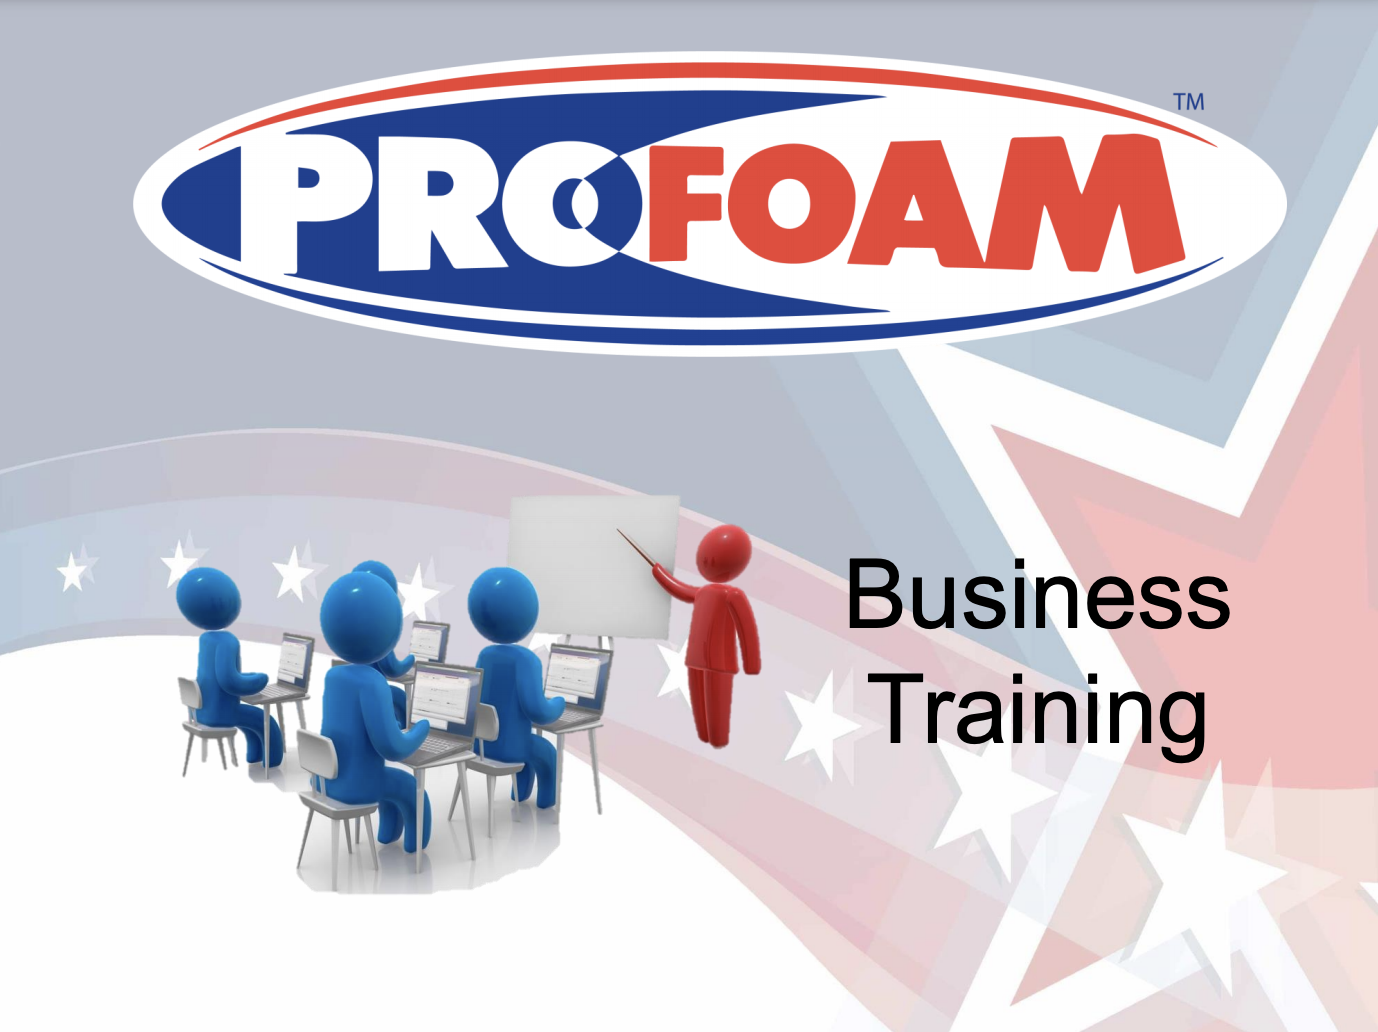 Profoam Business Training Updated 8-24-20